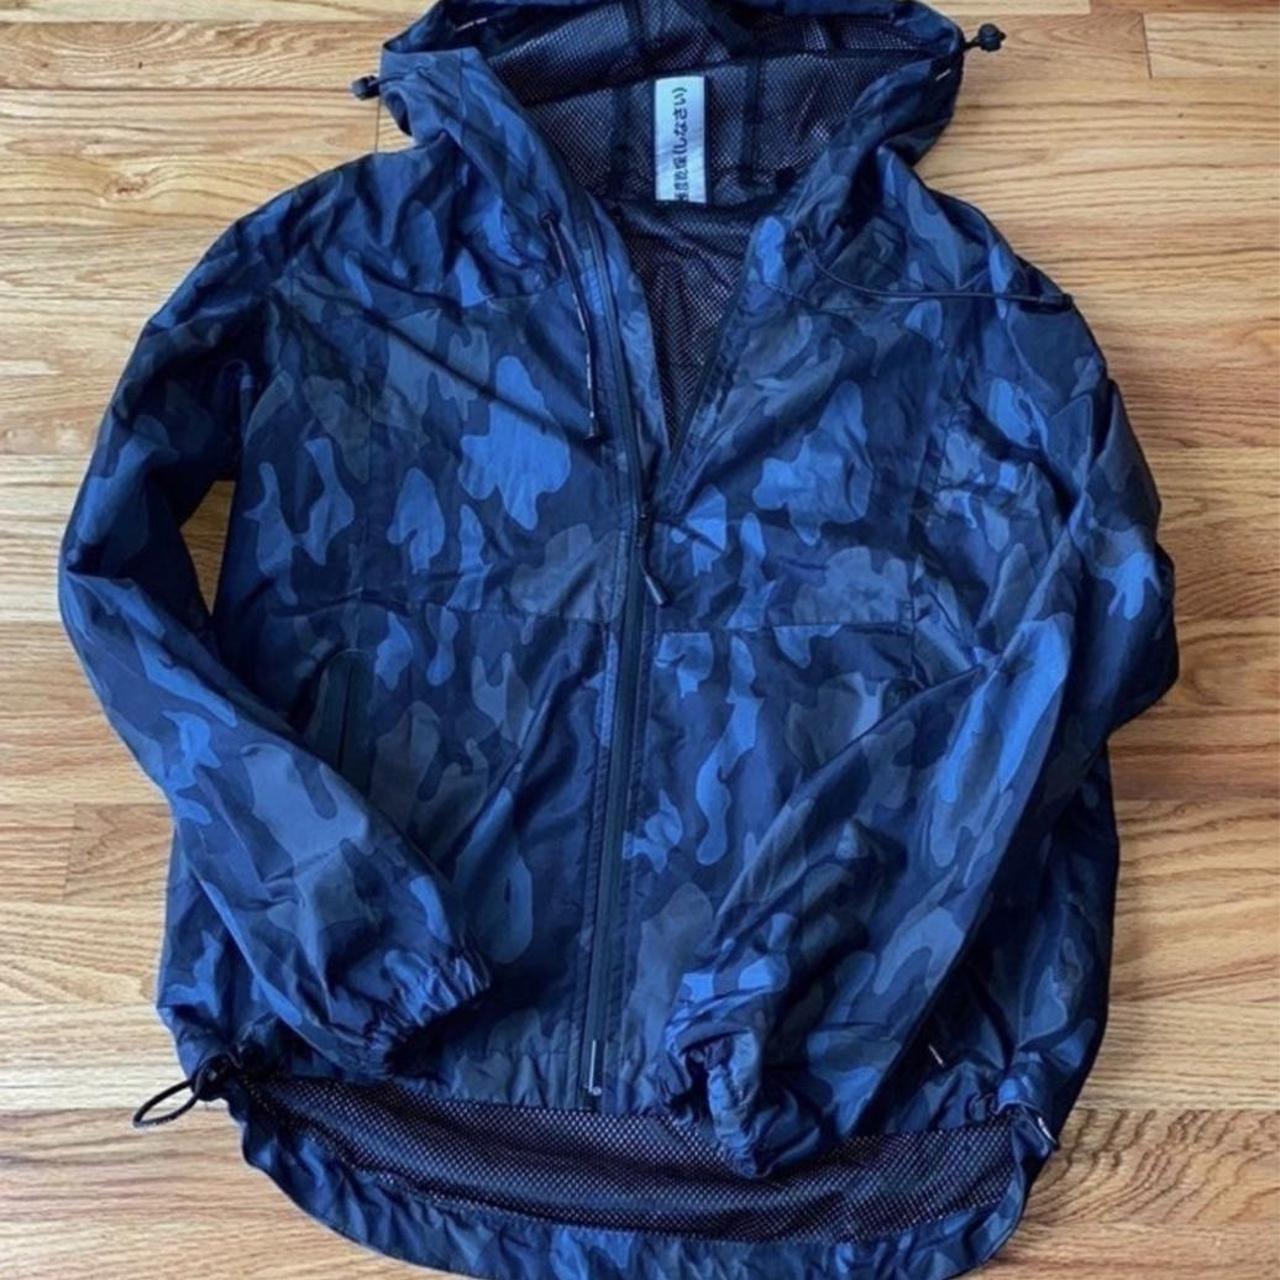 Product Image 1 - SUPERDRY Men’s rain jacket
Excellent condition